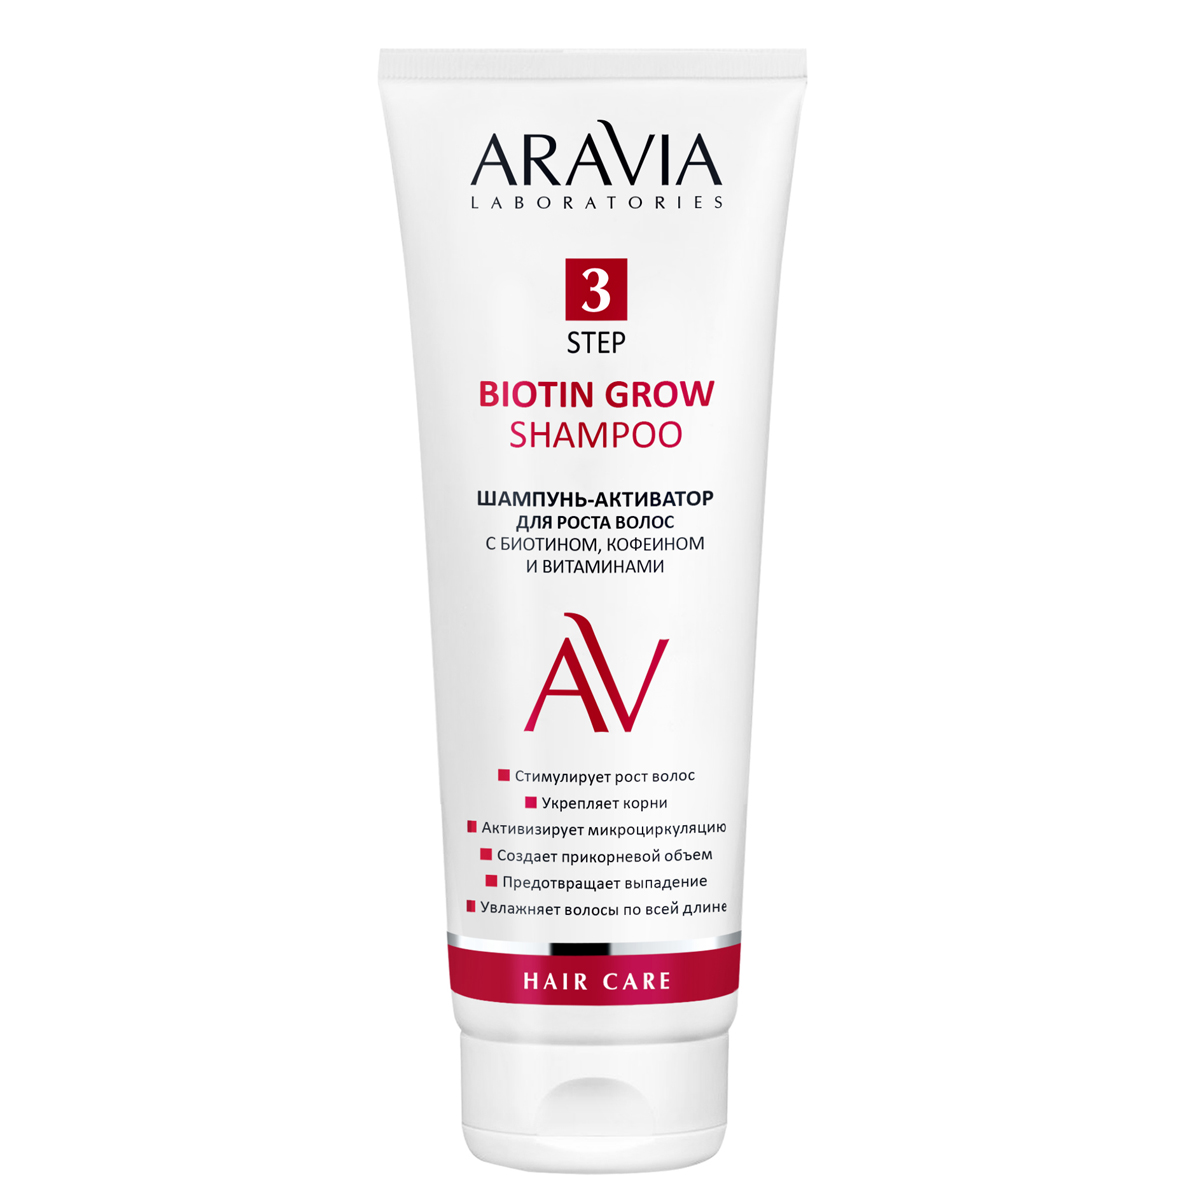 Aravia Laboratories Шампунь-активатор для роста волос с биотином, кофеином и витаминами Biotin Grow Shampoo, 250 мл (Aravia Laboratories, Уход за волосами)